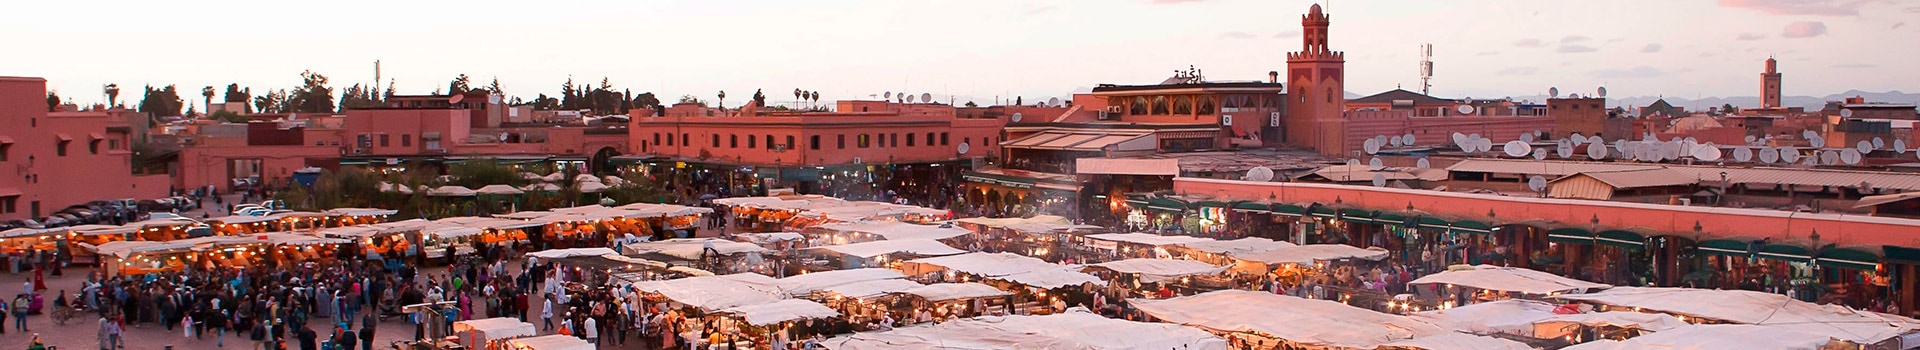 Berliini - Marrakech